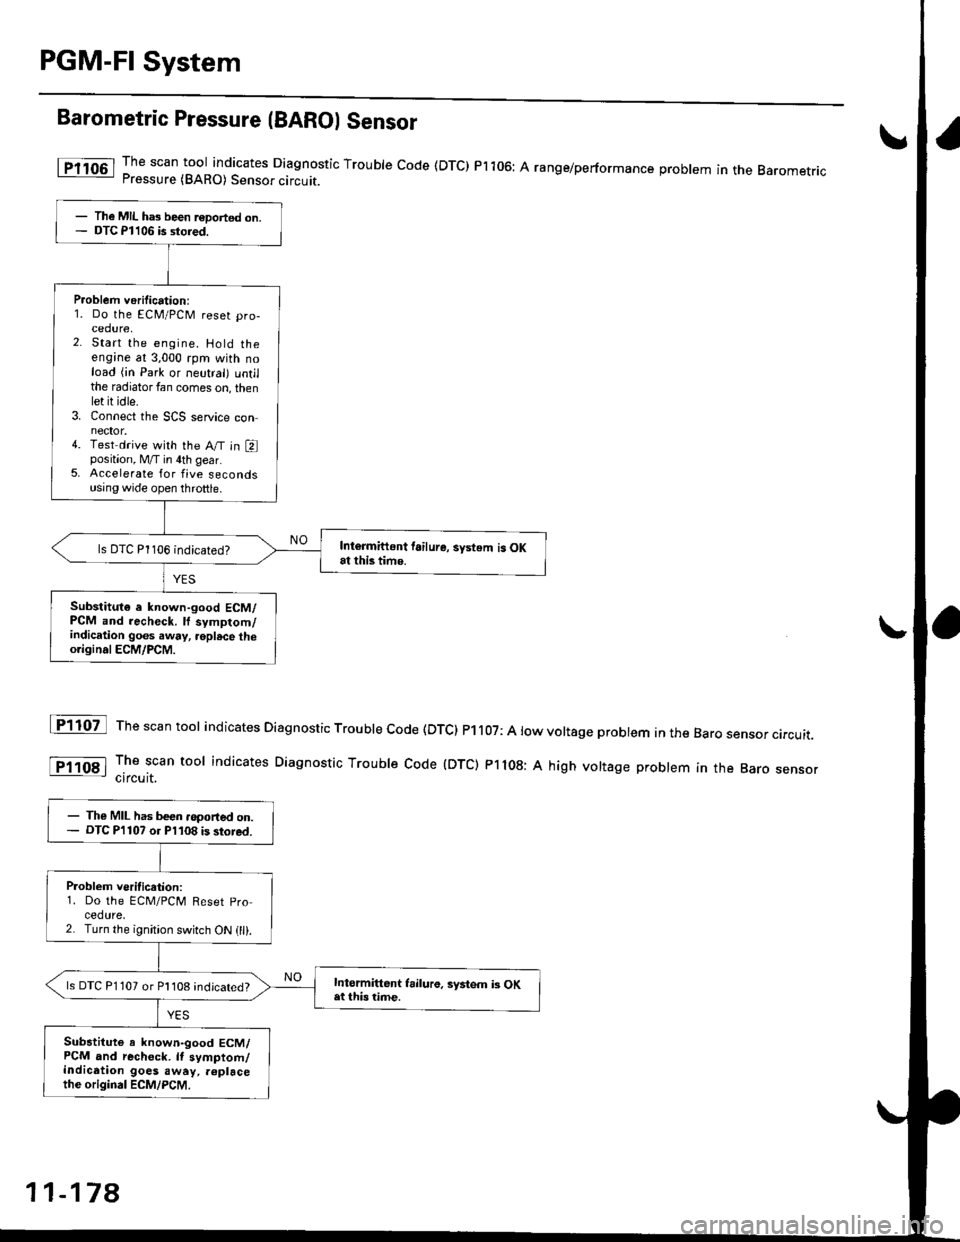 HONDA CIVIC 1996 6.G Service Manual PGM-FI System
Barometric Pressure (BAROI Sensor
The scan tool indicates Diagnostic Trouble code (DTC) Pi106: A range/performance problem in the BaromerrrcPressure (BARO) Sensor circuit.
The scan tool 